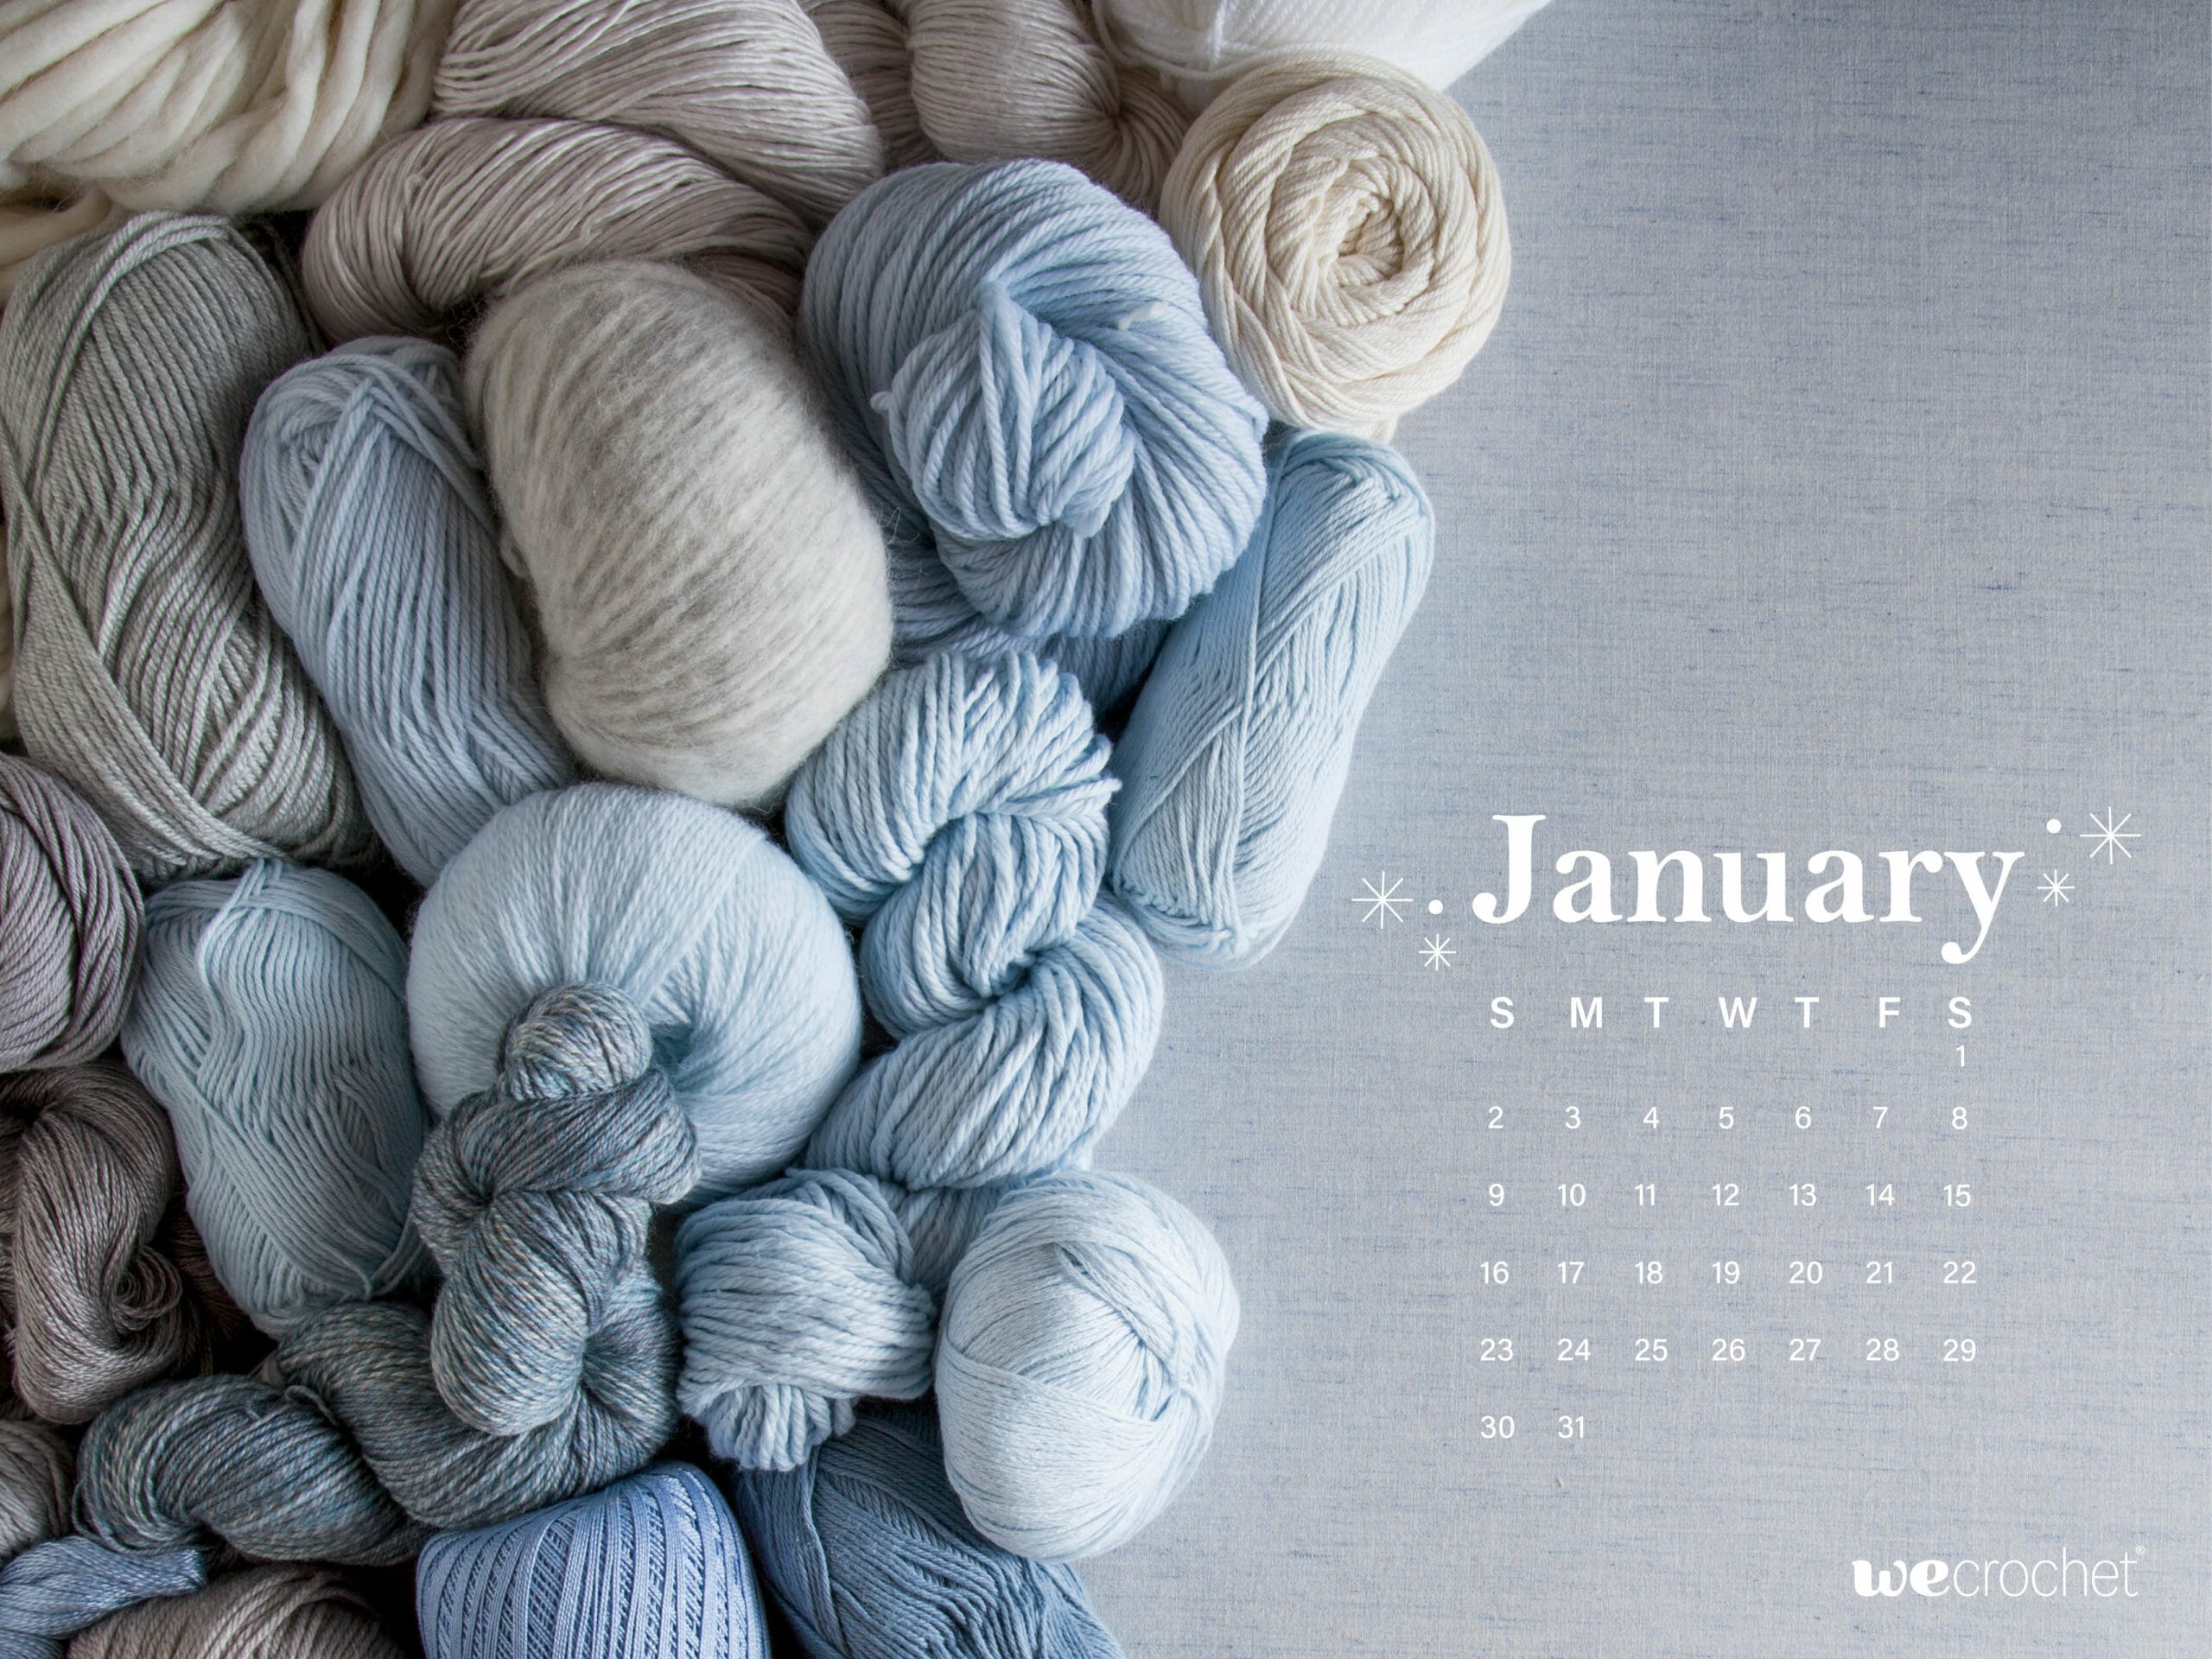 January 2022 Calendar Wallpaper Ipad.Free Download January 2022 Calendar Wallpaper Wecrochet Staff Blog